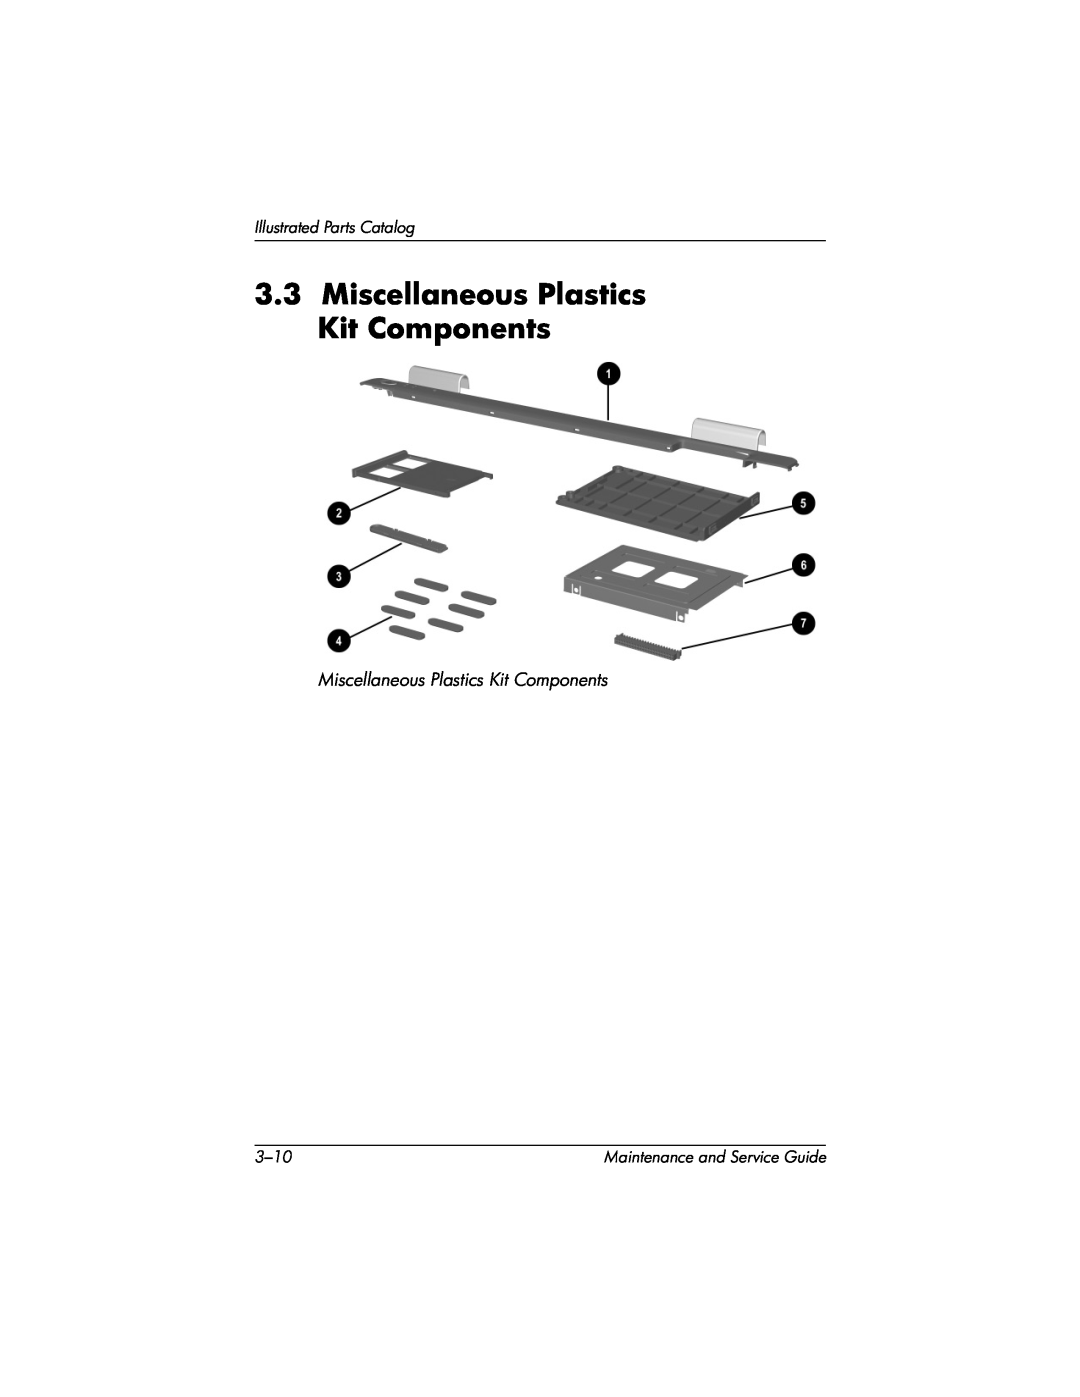 HP X1098AP, X1027AP Miscellaneous Plastics Kit Components, Illustrated Parts Catalog, 3-10, Maintenance and Service Guide 